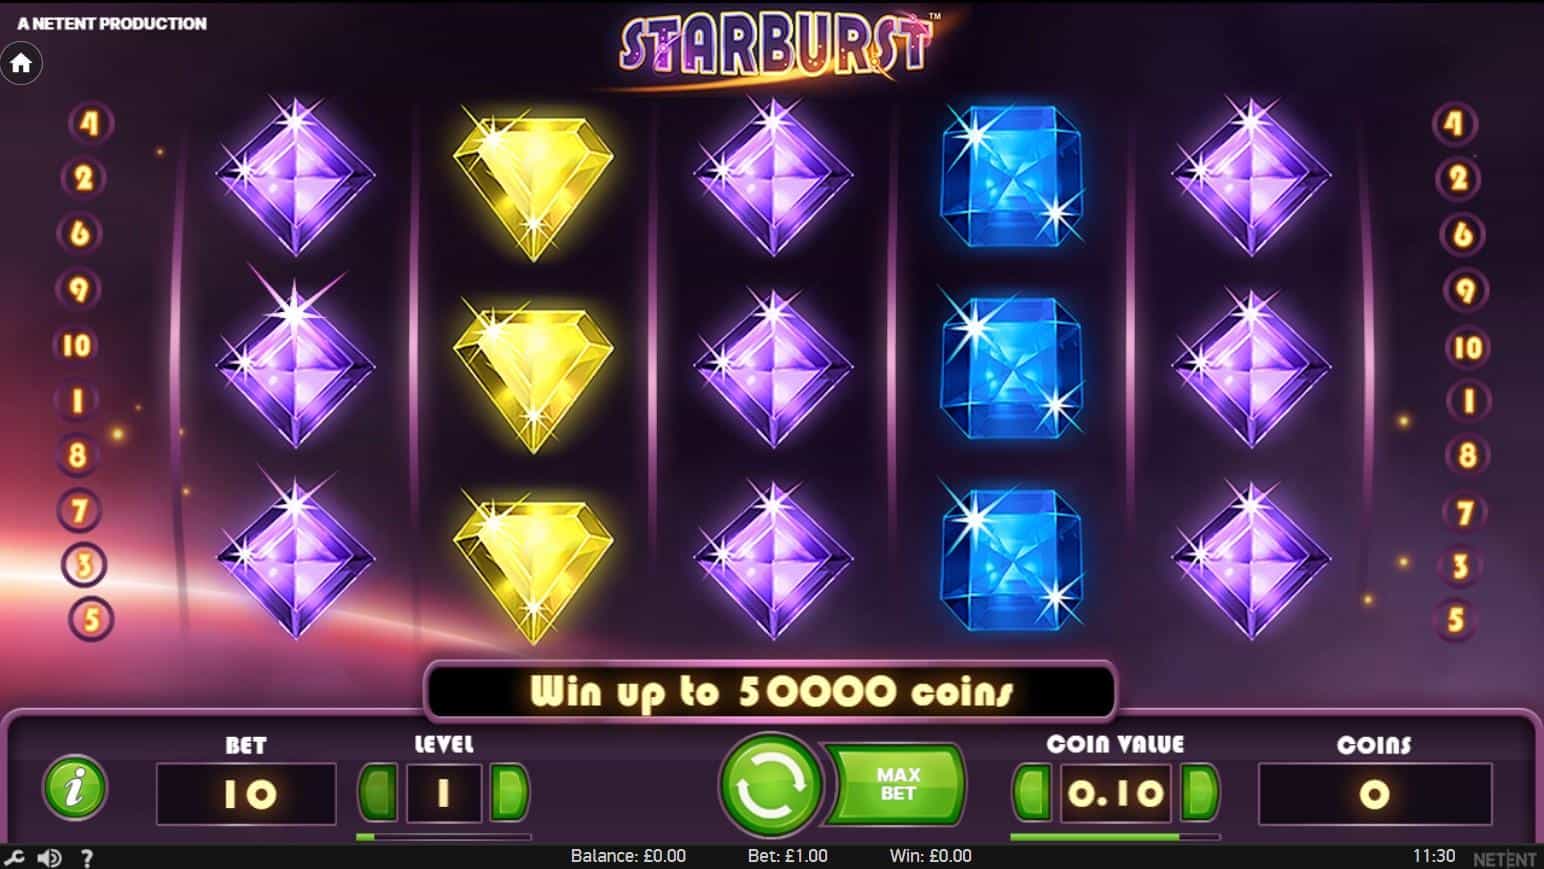 Starburst by NetEnt Slot Game Review at E-Vegas.com